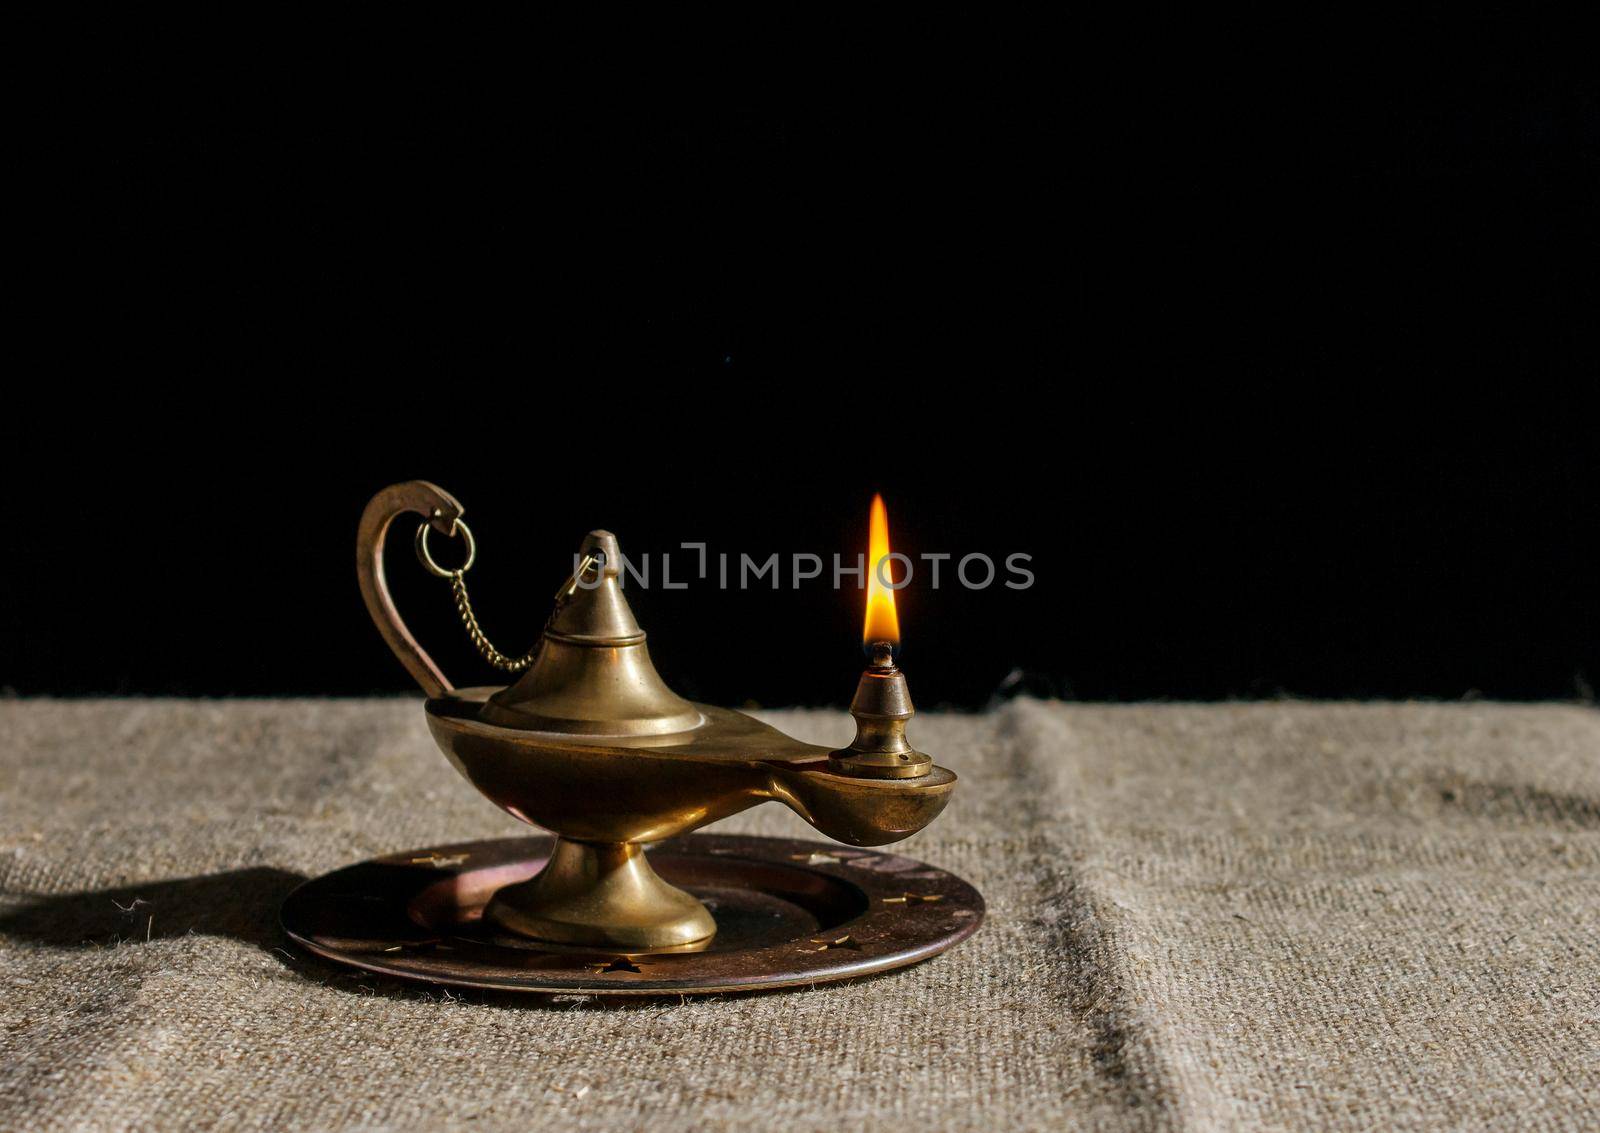 burning magic lamp of aladdin on table. indoor closeup on black background